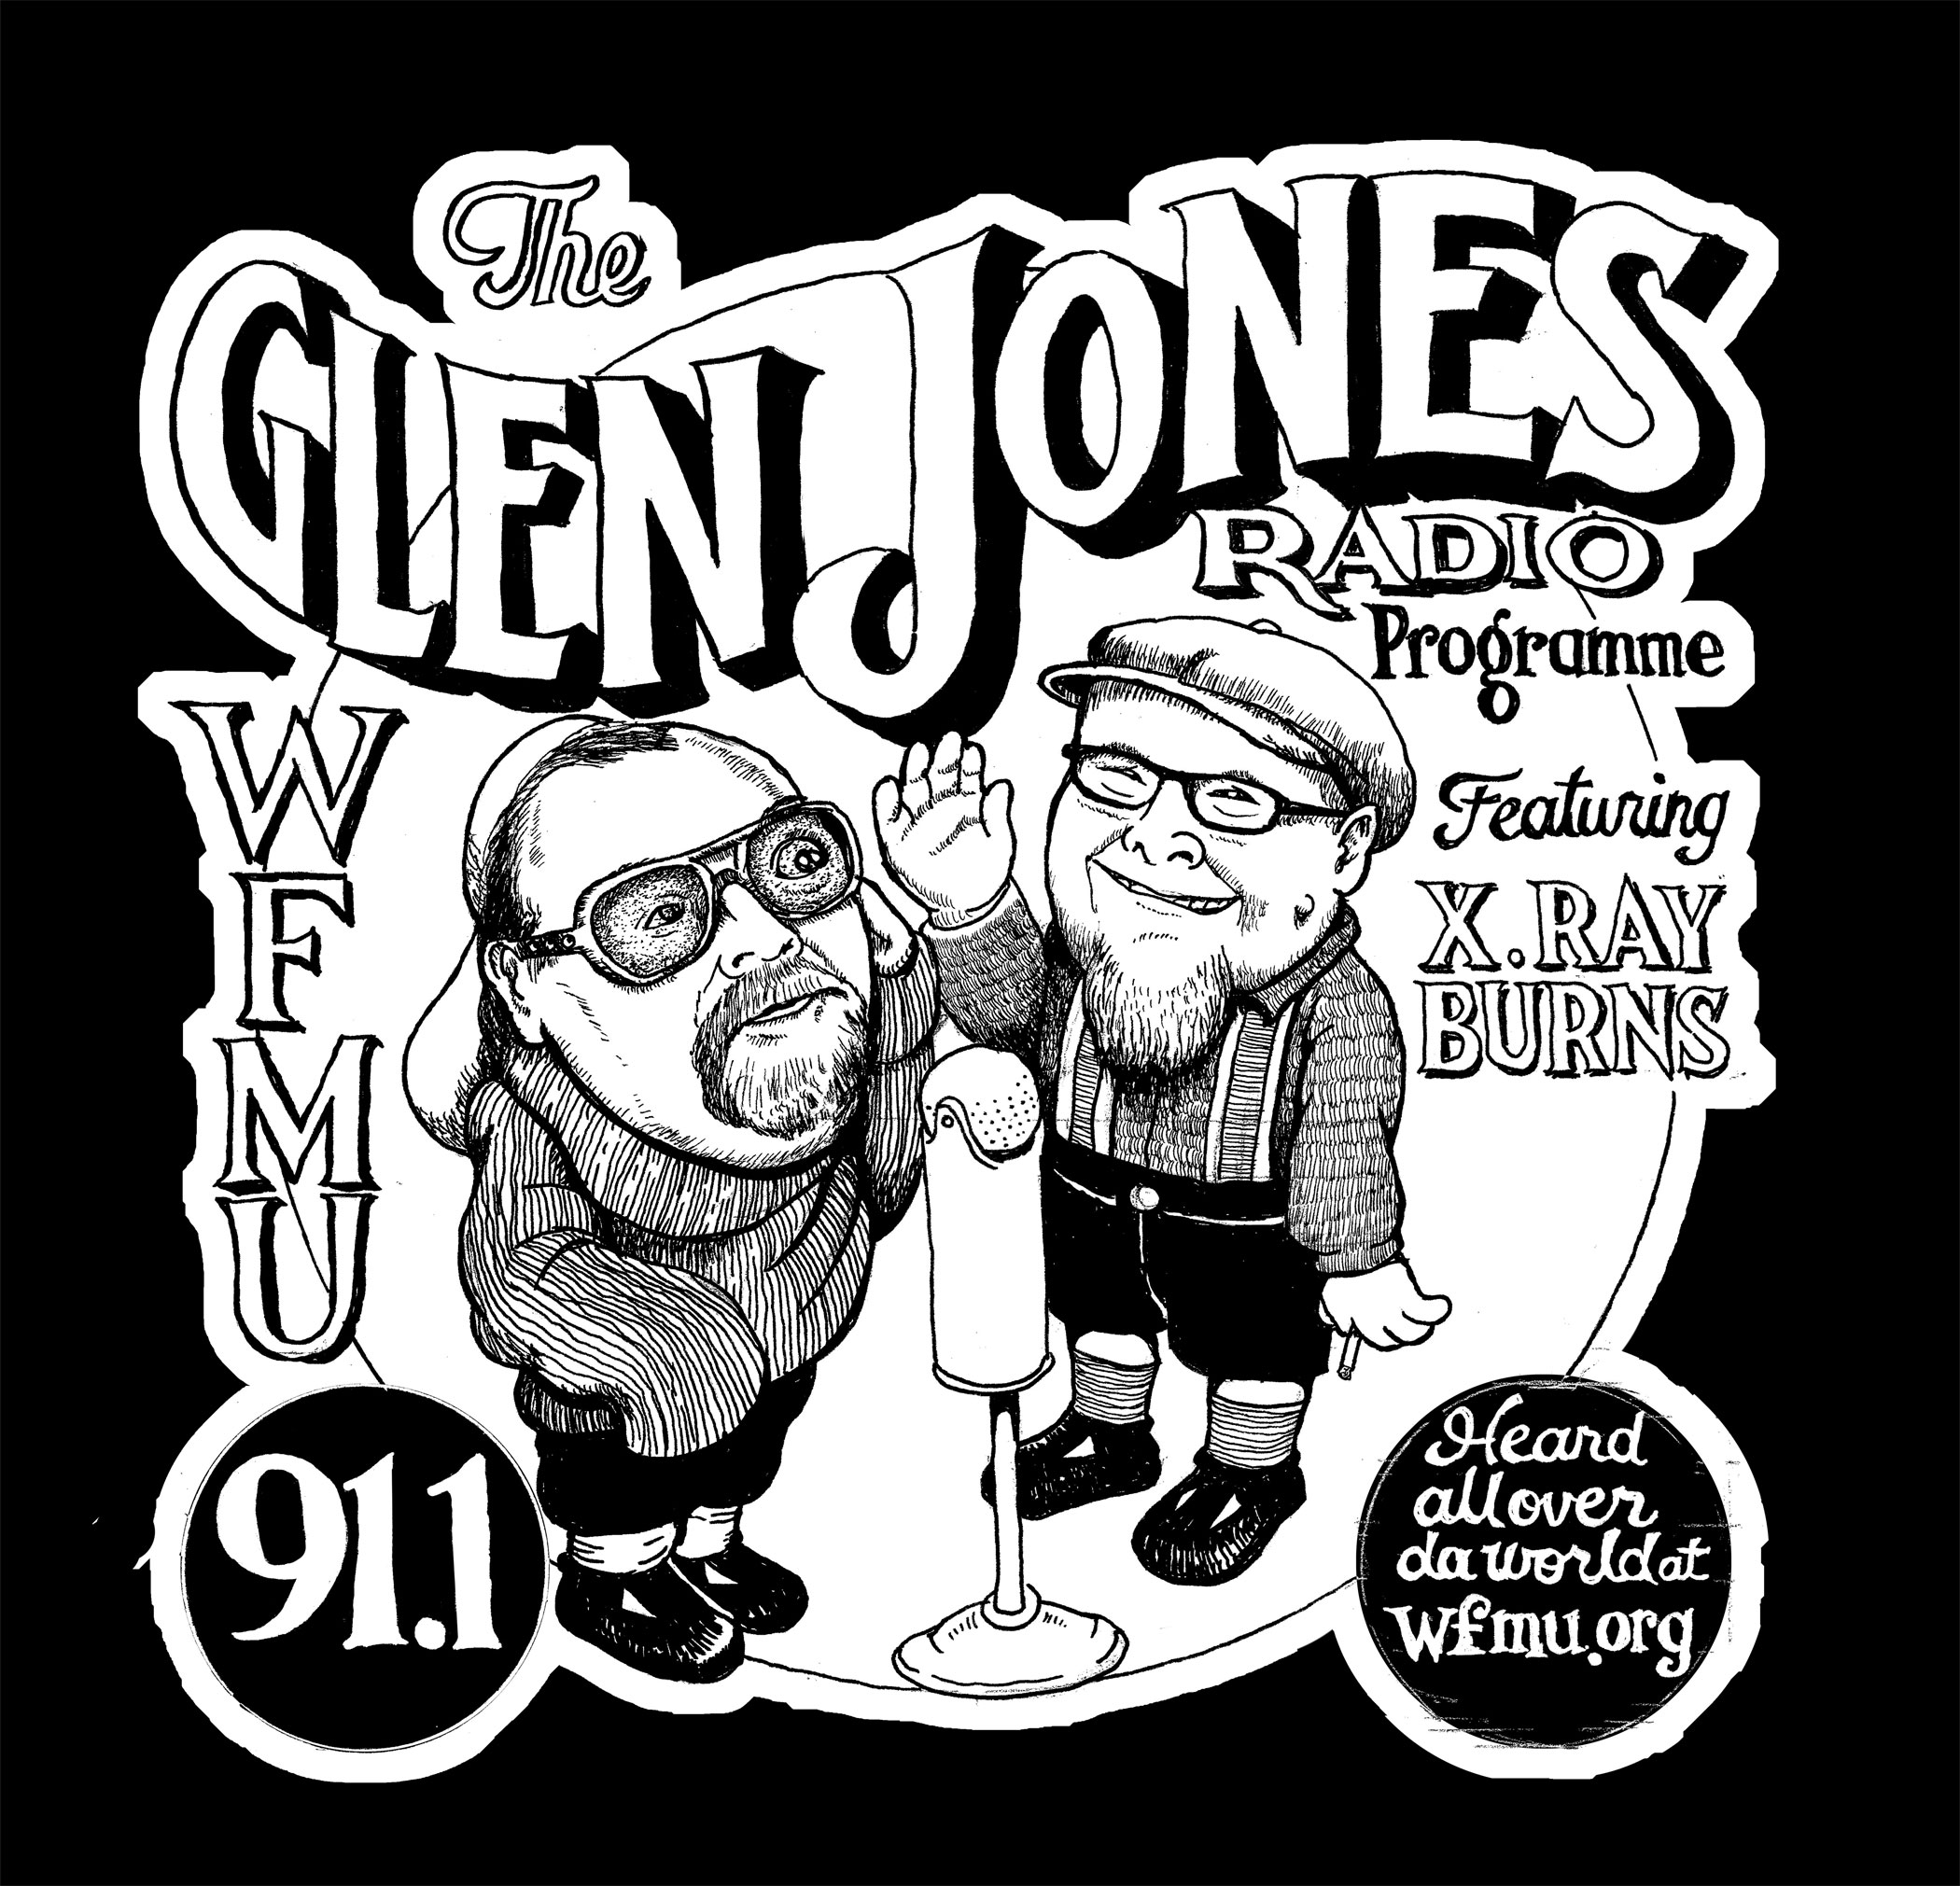 WFMU: The Glen Jones Radio Programme: Playlist from March 1, 2020